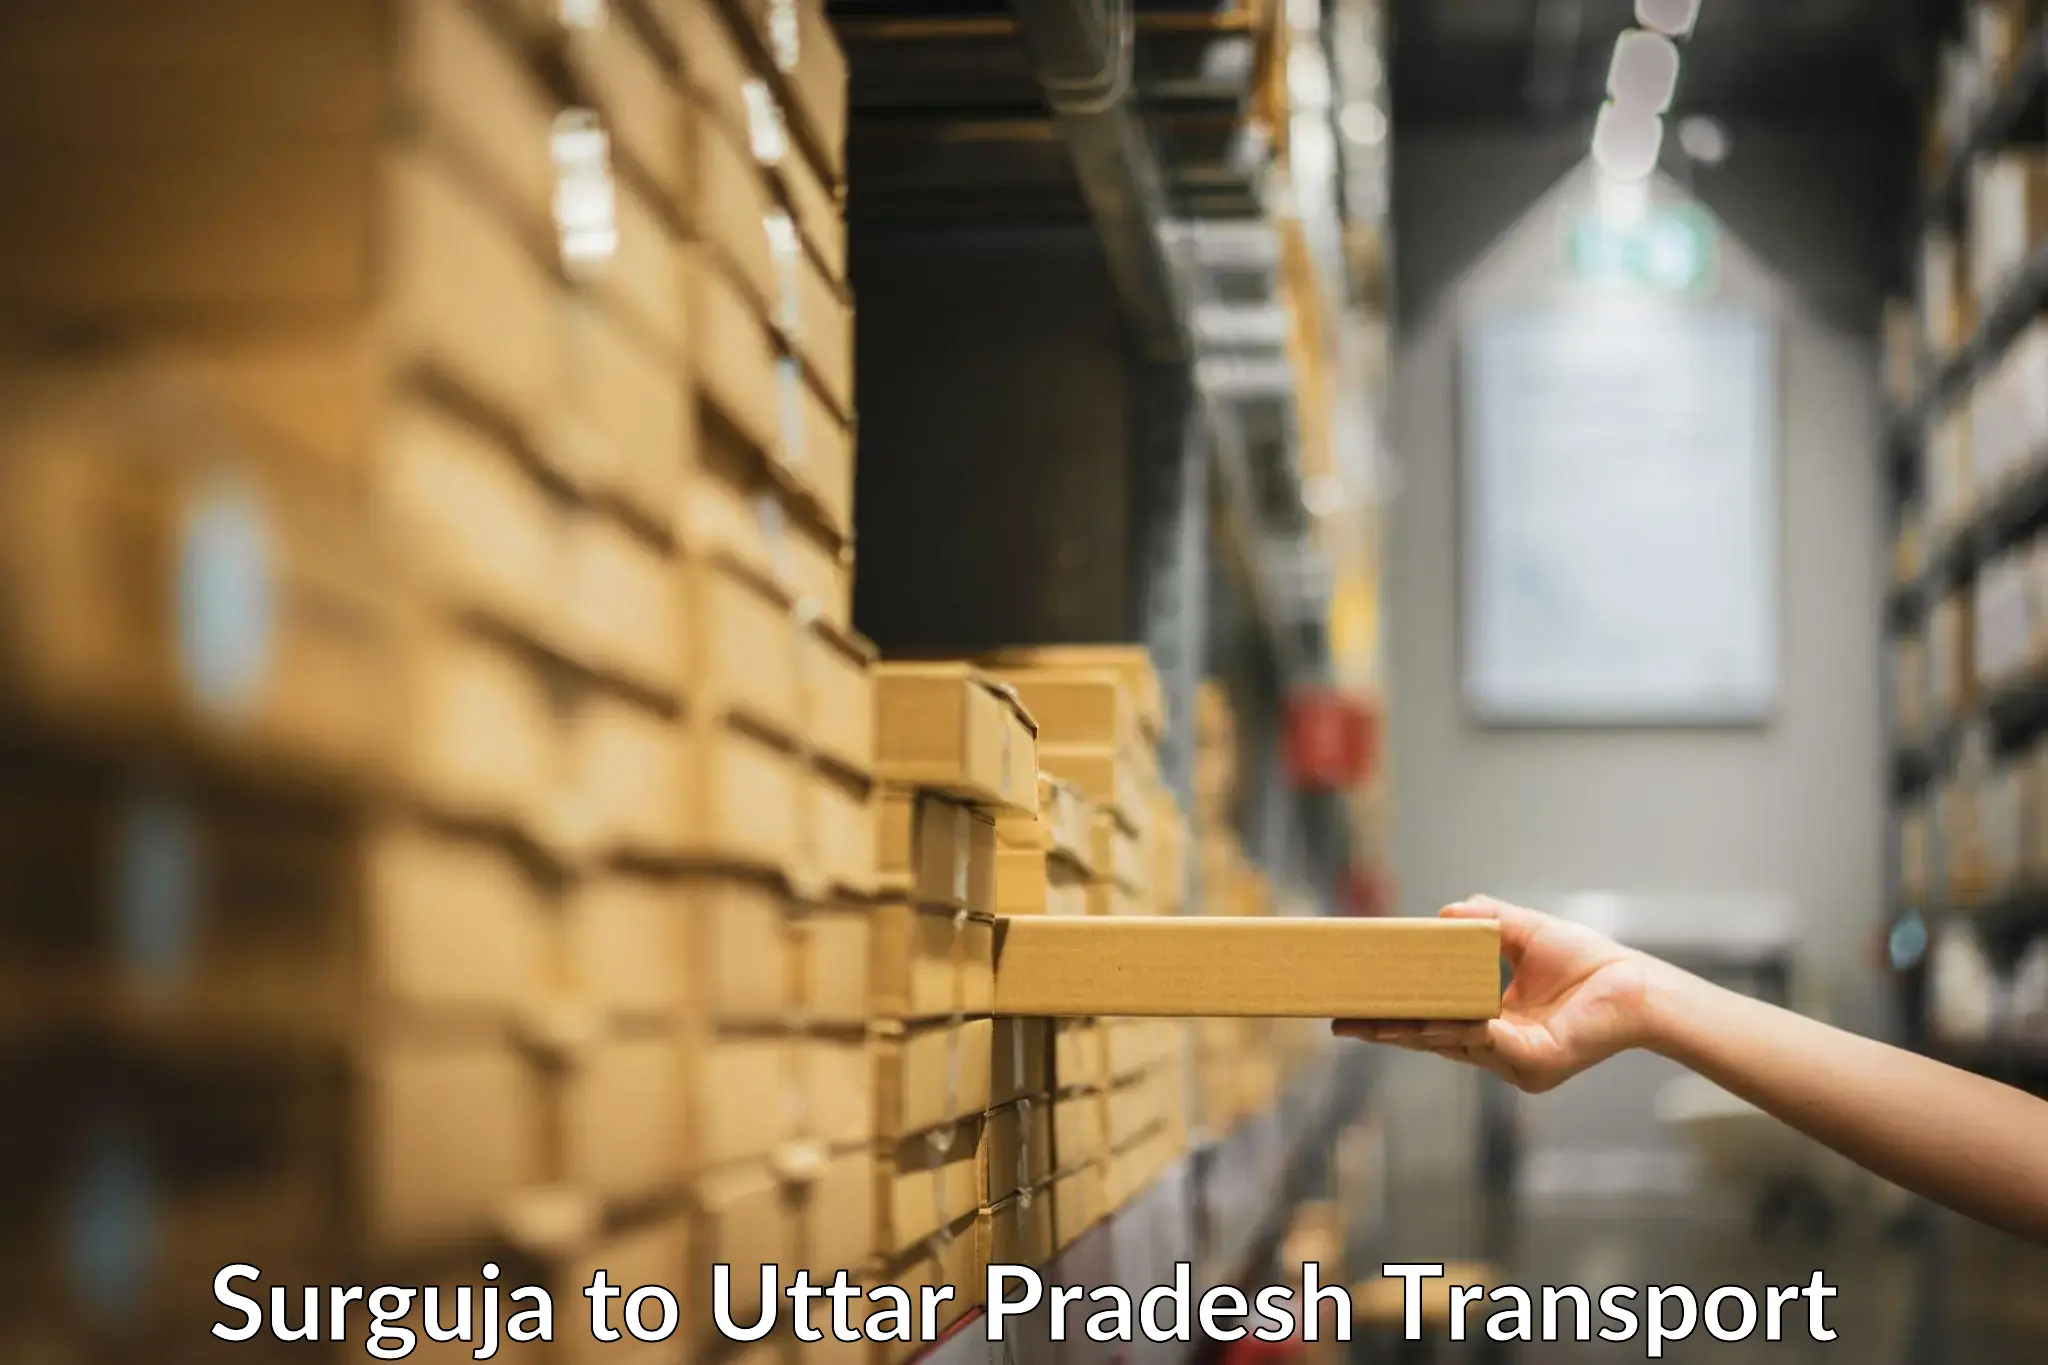 Furniture transport service Surguja to Sitapur